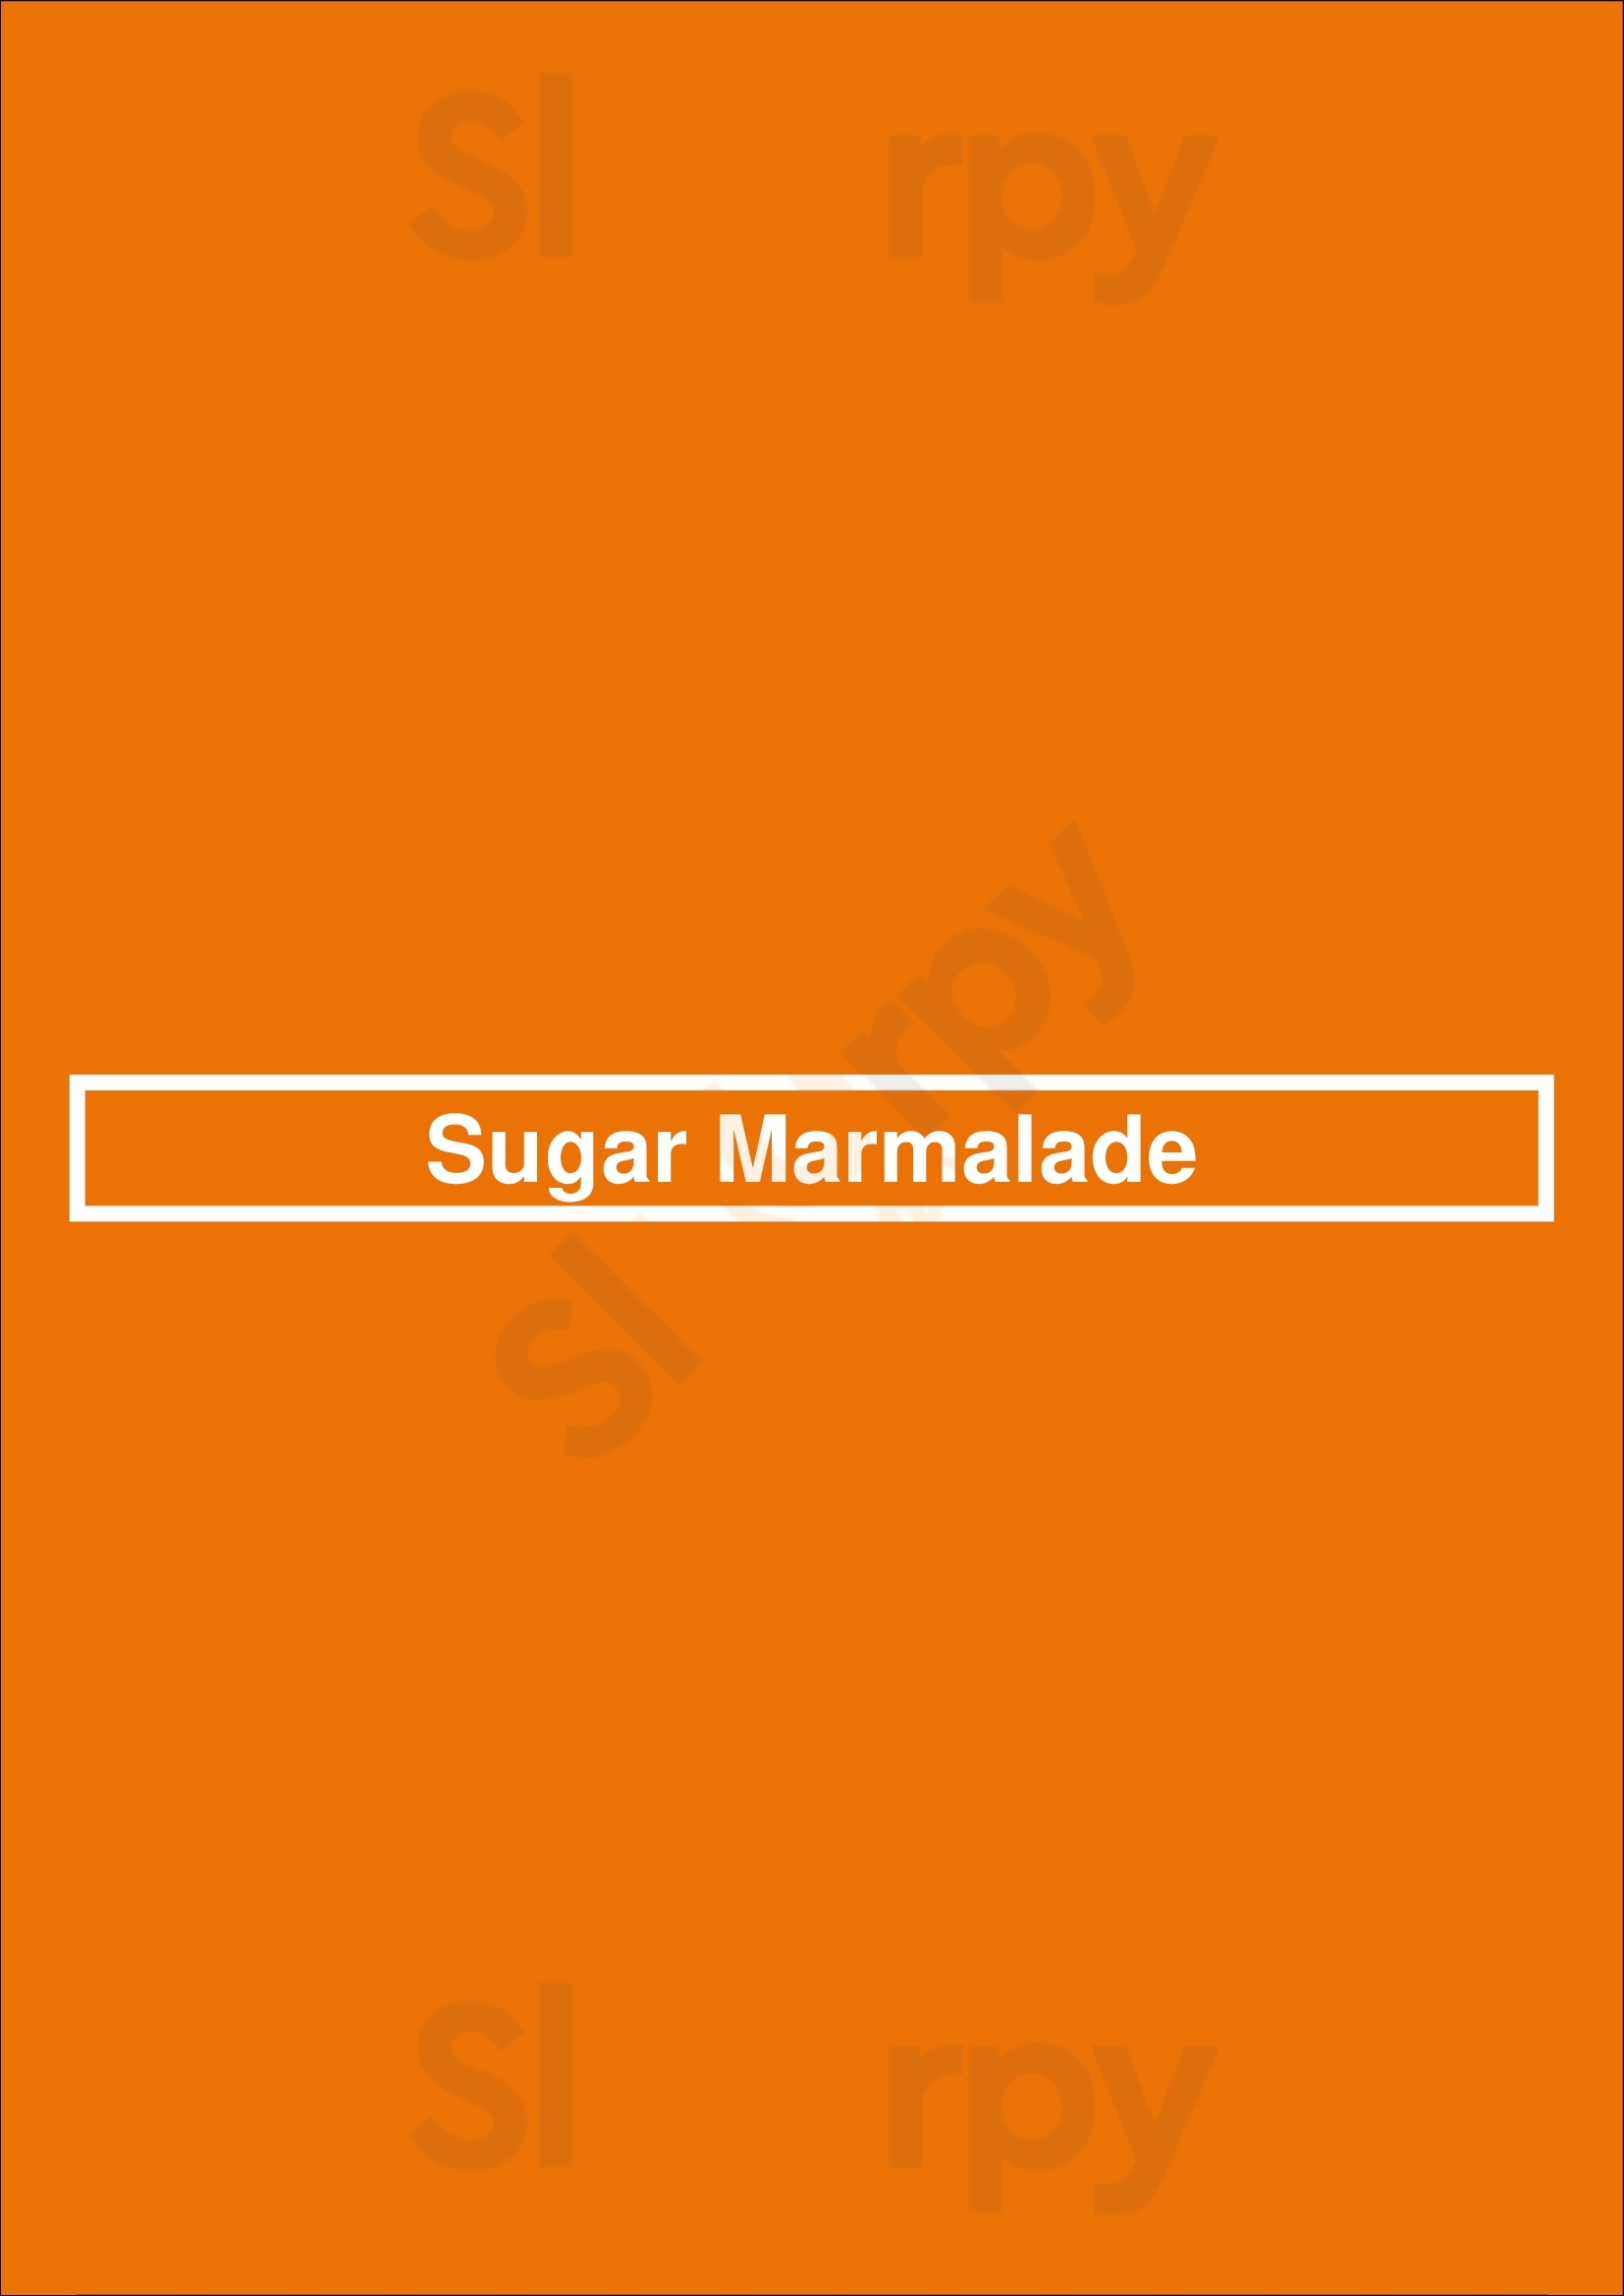 Sugar Marmalade Markham Menu - 1